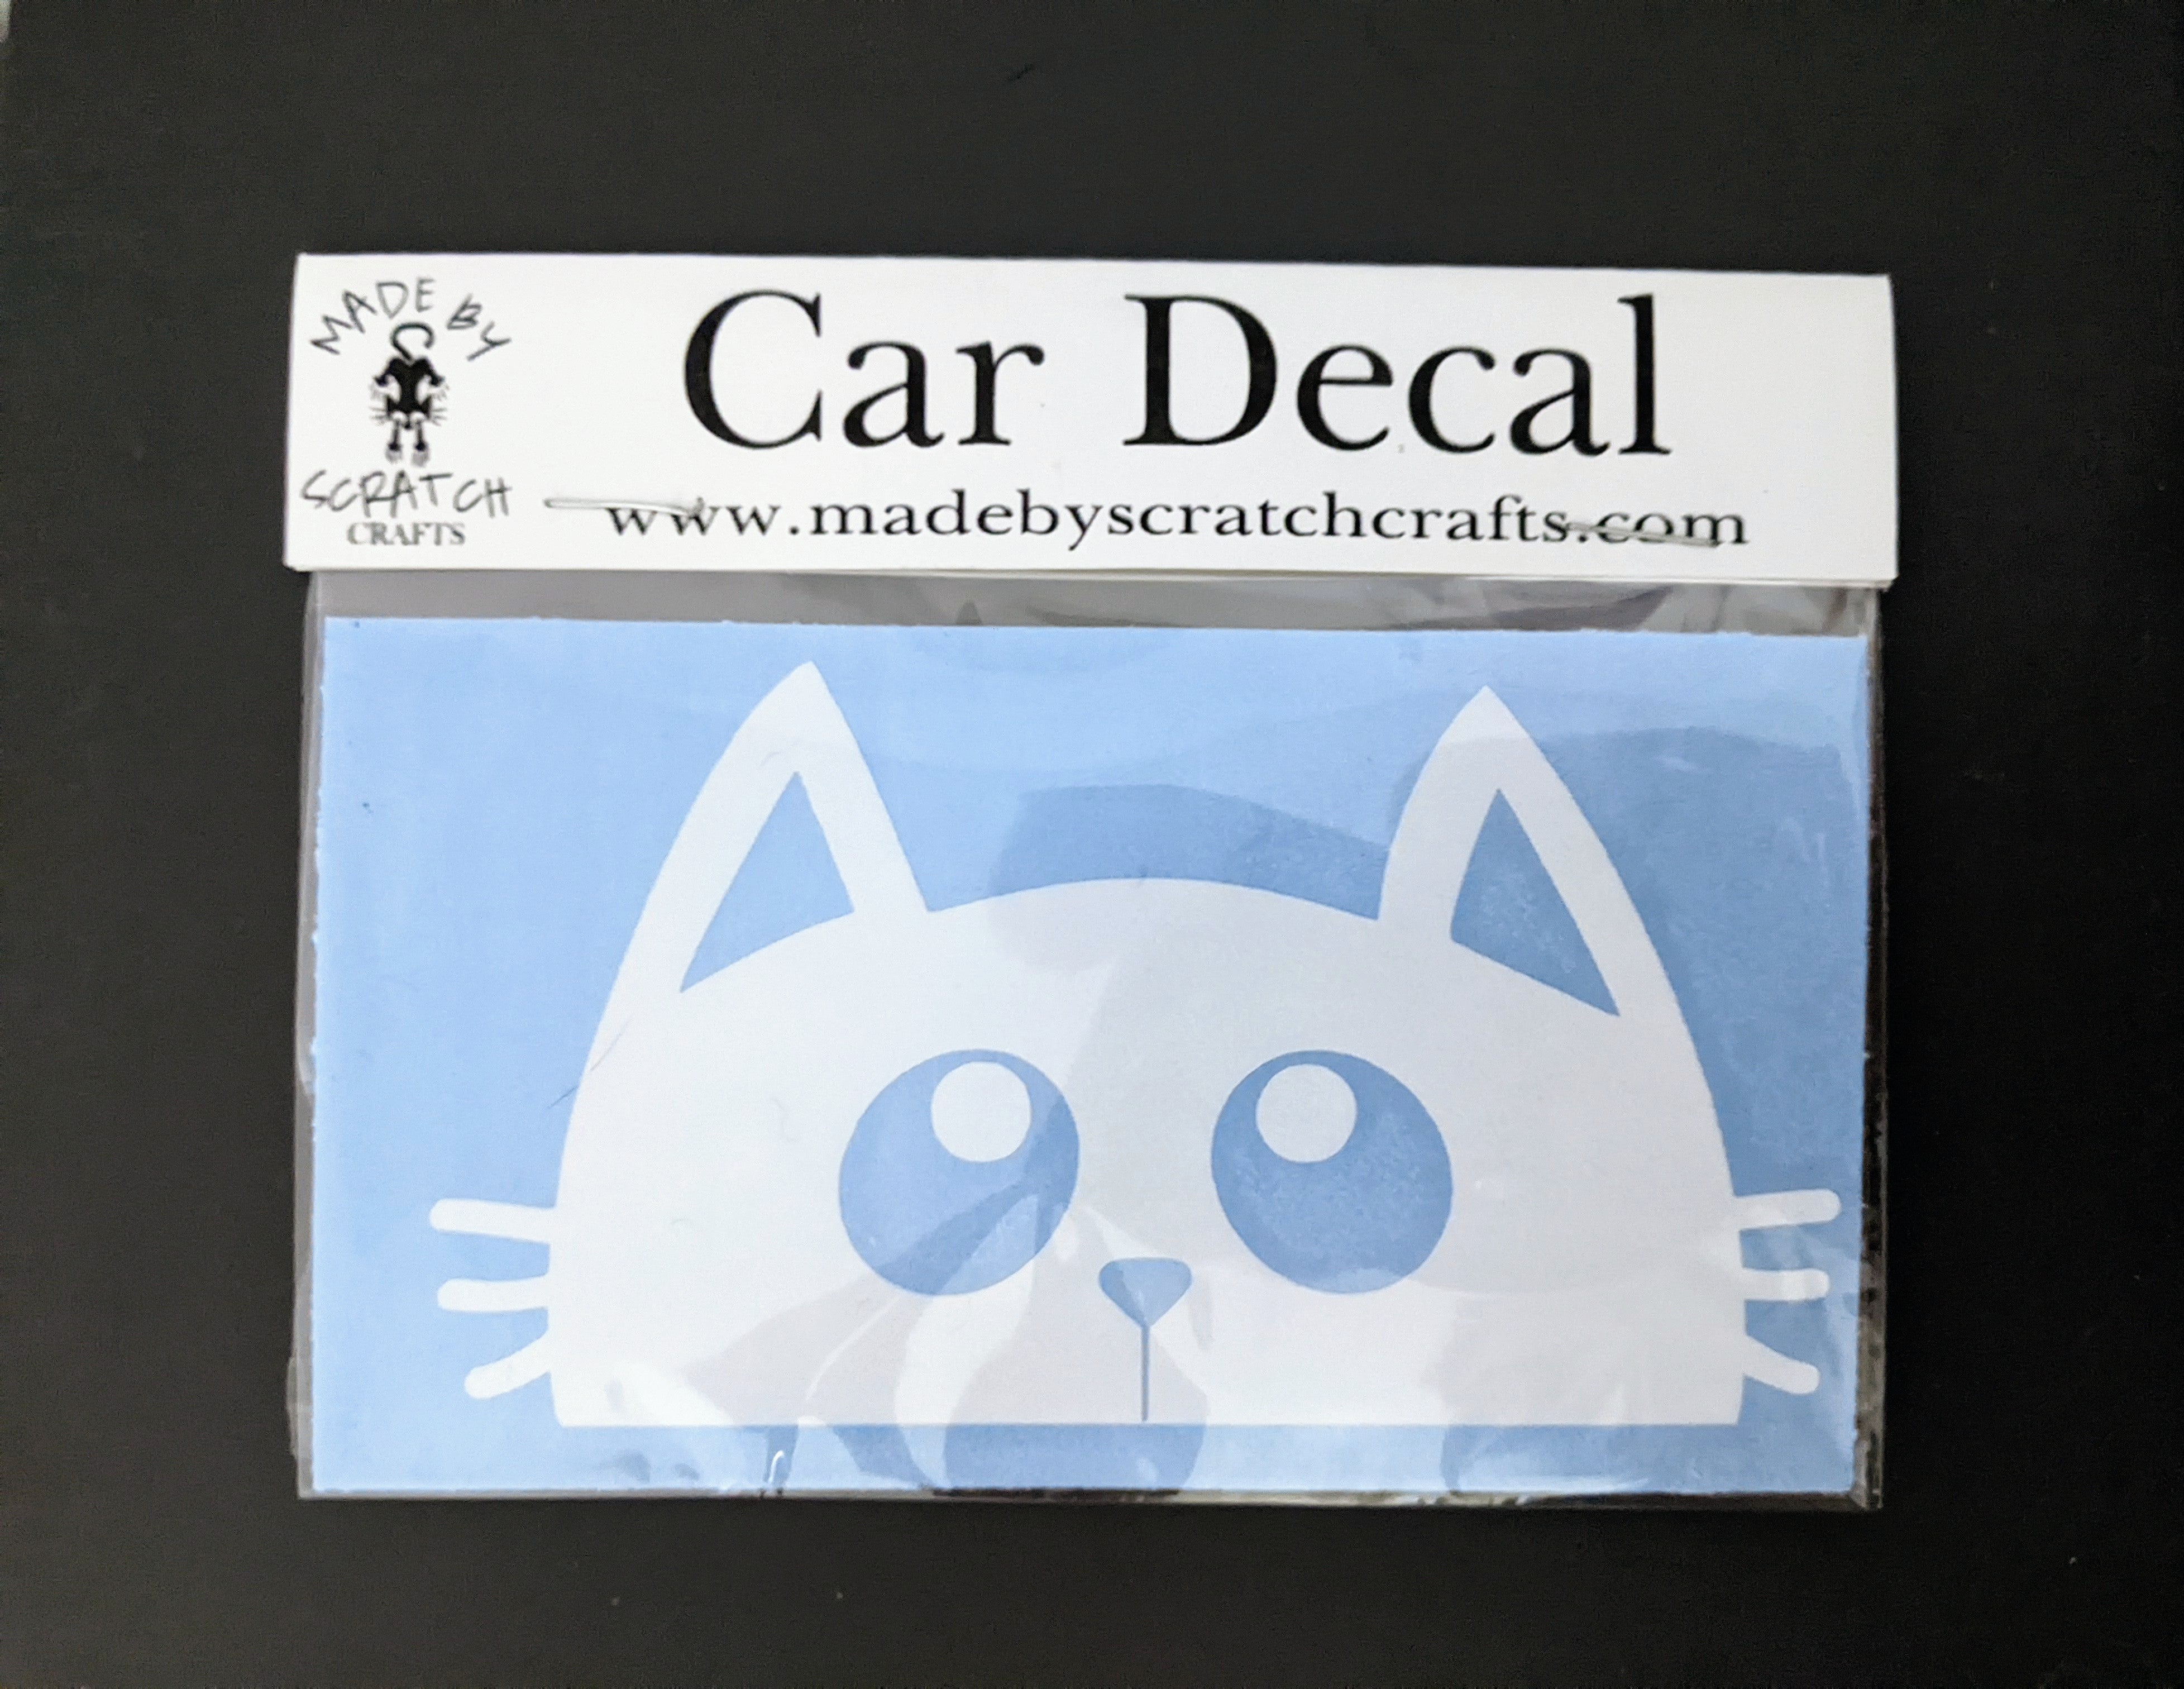 Cats Peeking Cat Window Decal Sticker, Custom Made In the USA